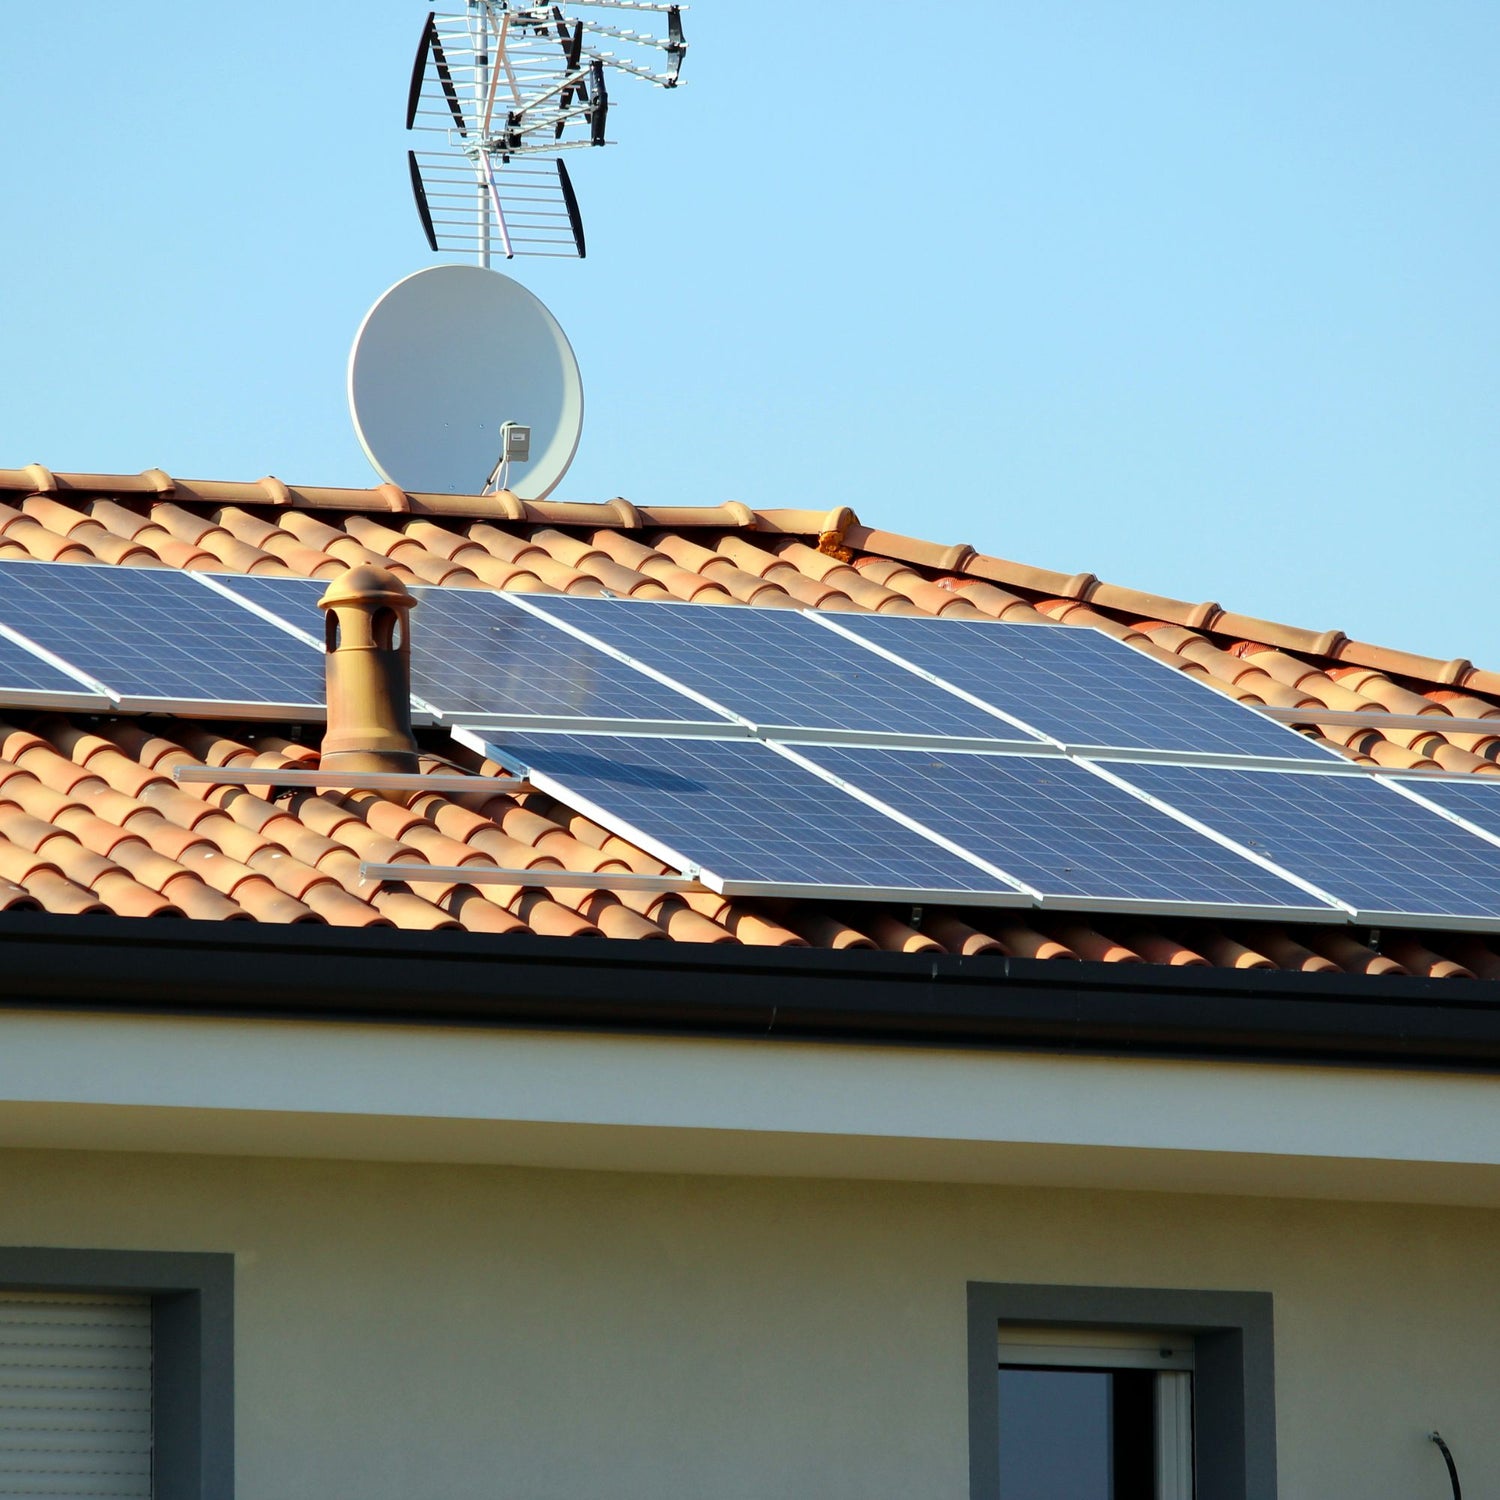 Solar Panels Canberra